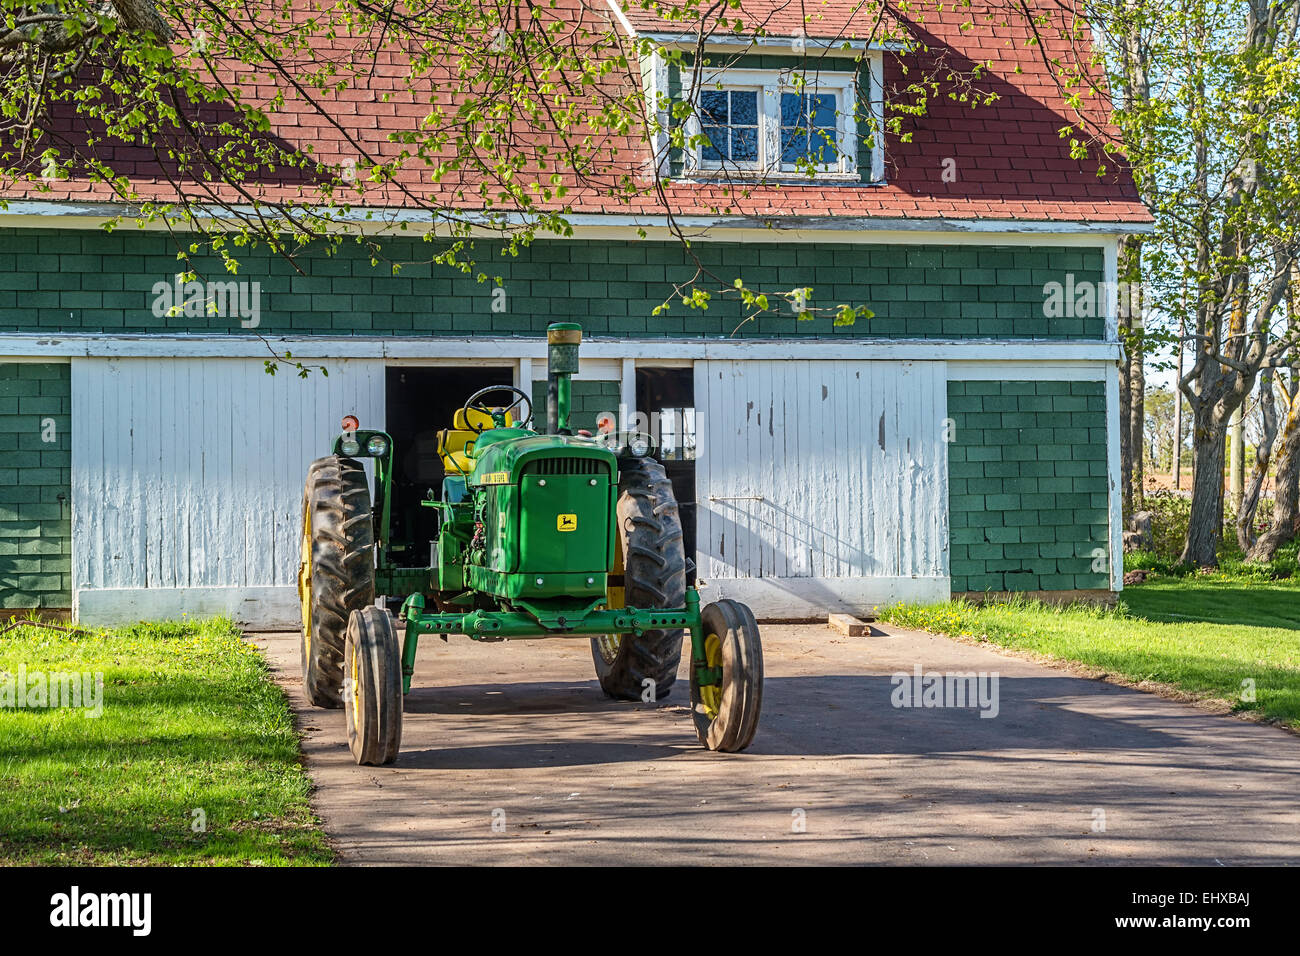 John Deere Historical Logos 30" Large Metal Tin Sign Vintage Farm Tractor Barn 